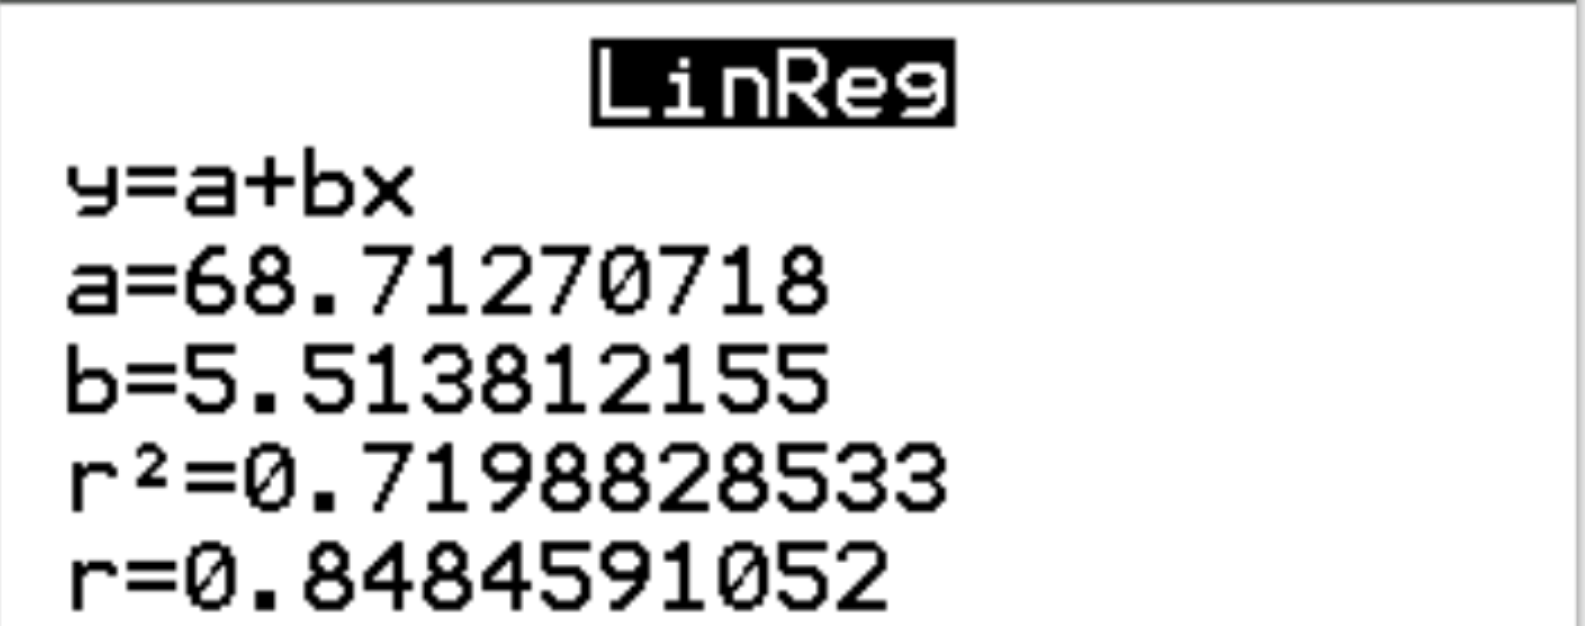 Linear regression output on a TI-84 calculator